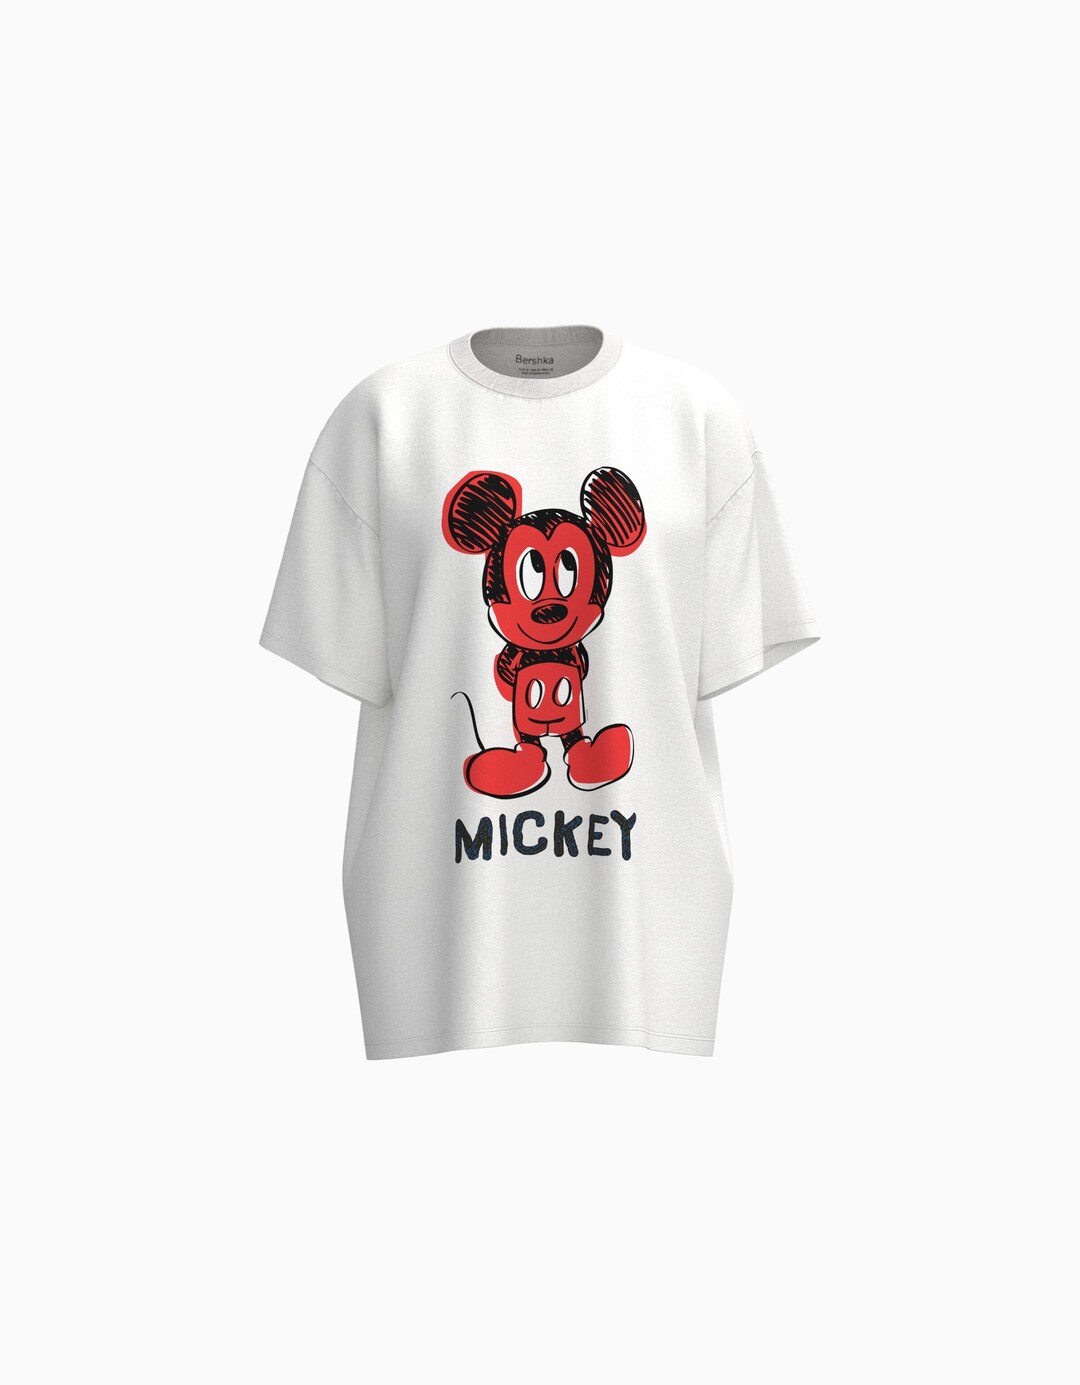 Camiseta Mickey manga corta oversize fit print